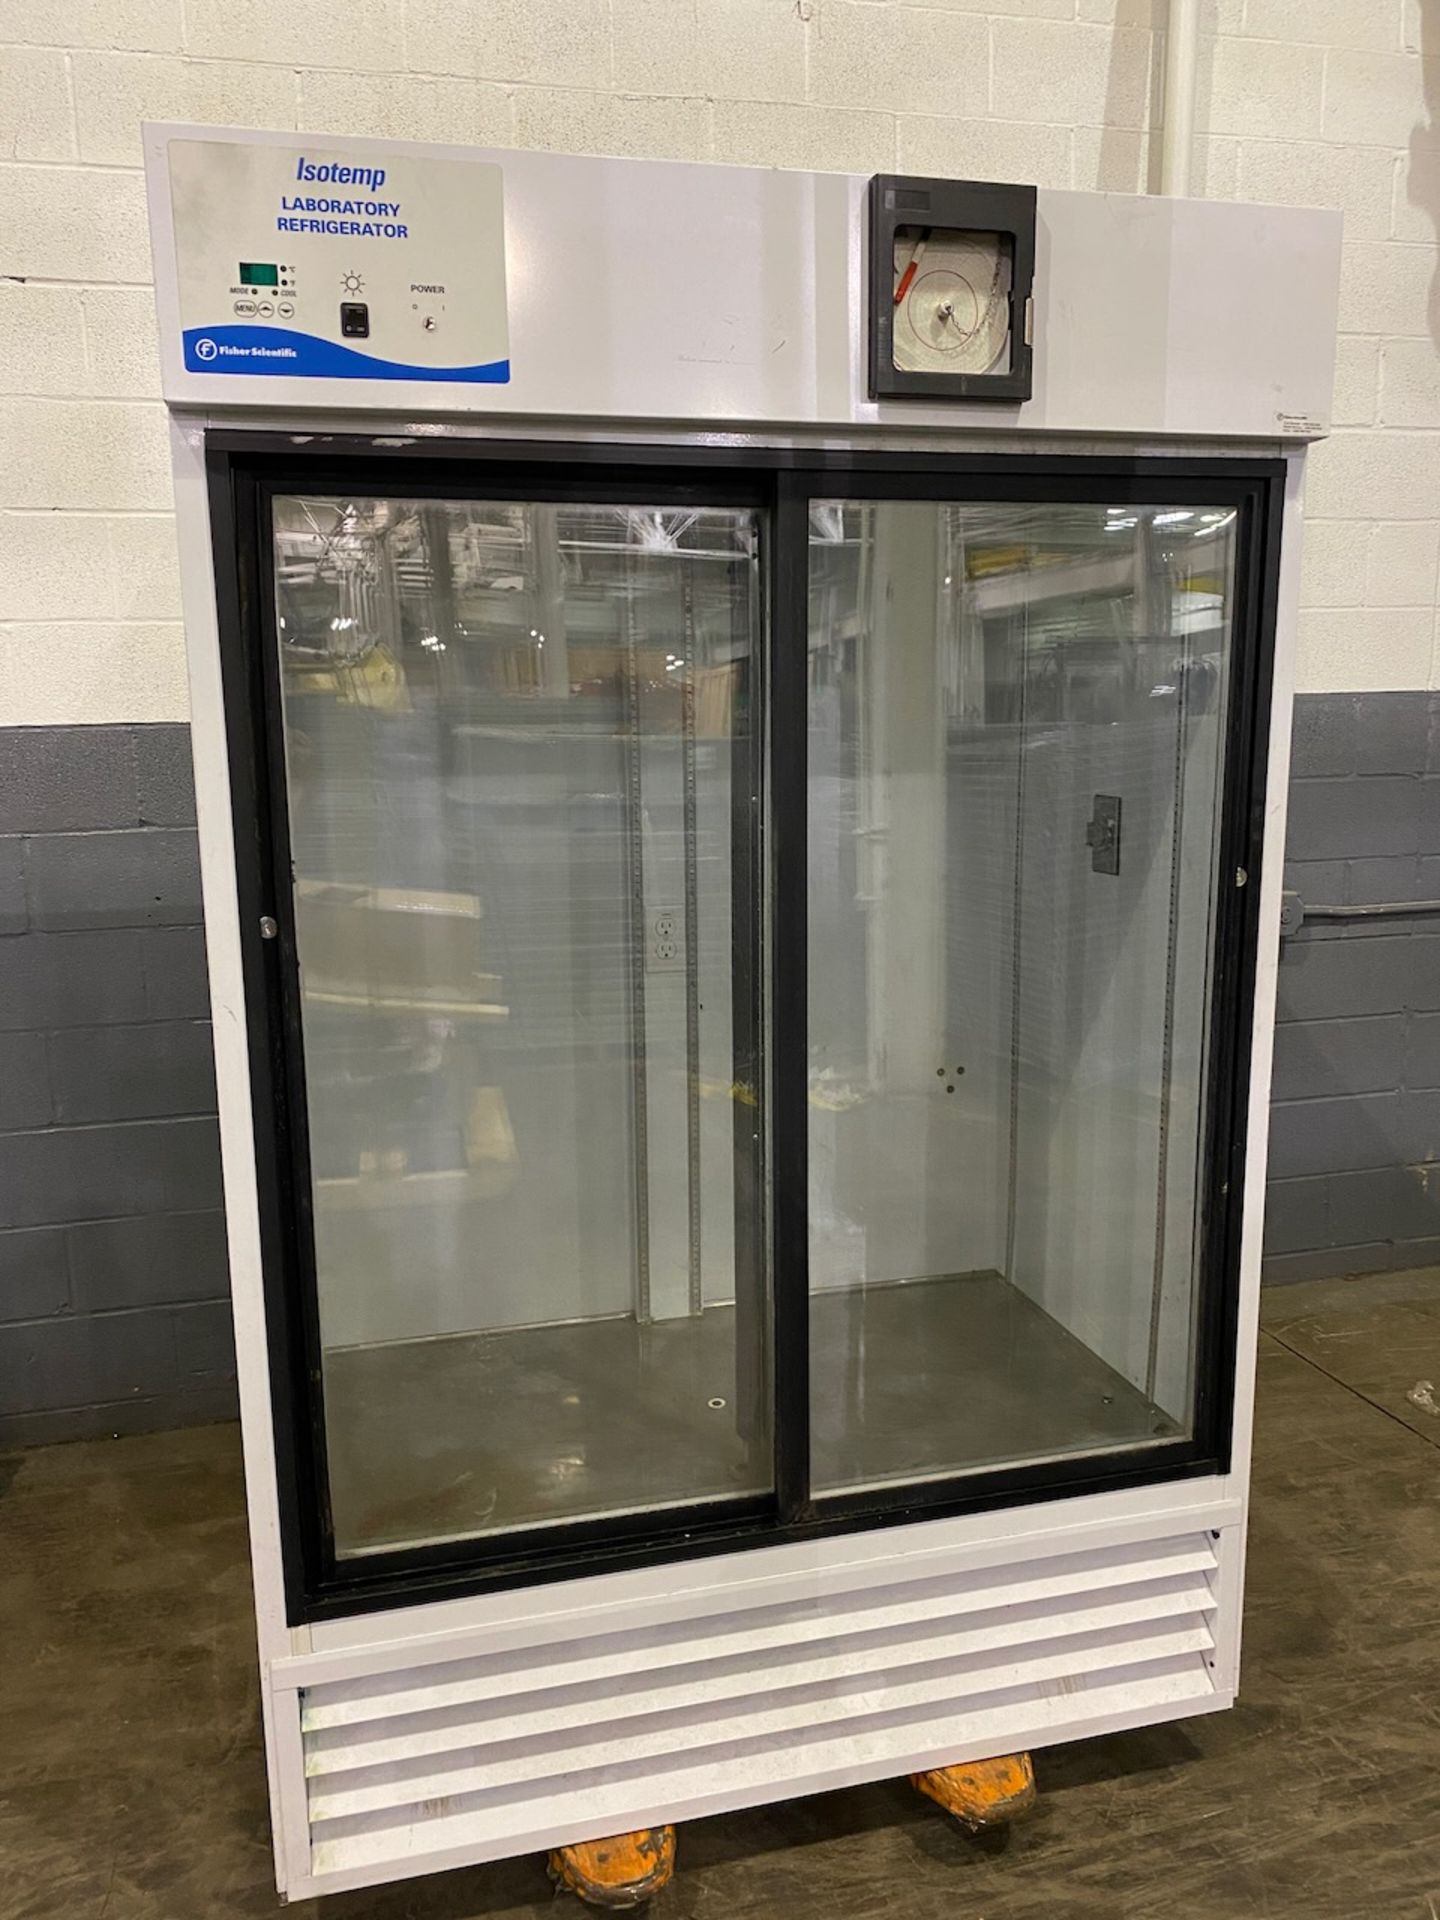 Fisher Scientific Isotemp refrigerator, model 13-986-145GR, 25" x 46" x 51" tall chamber, S/N